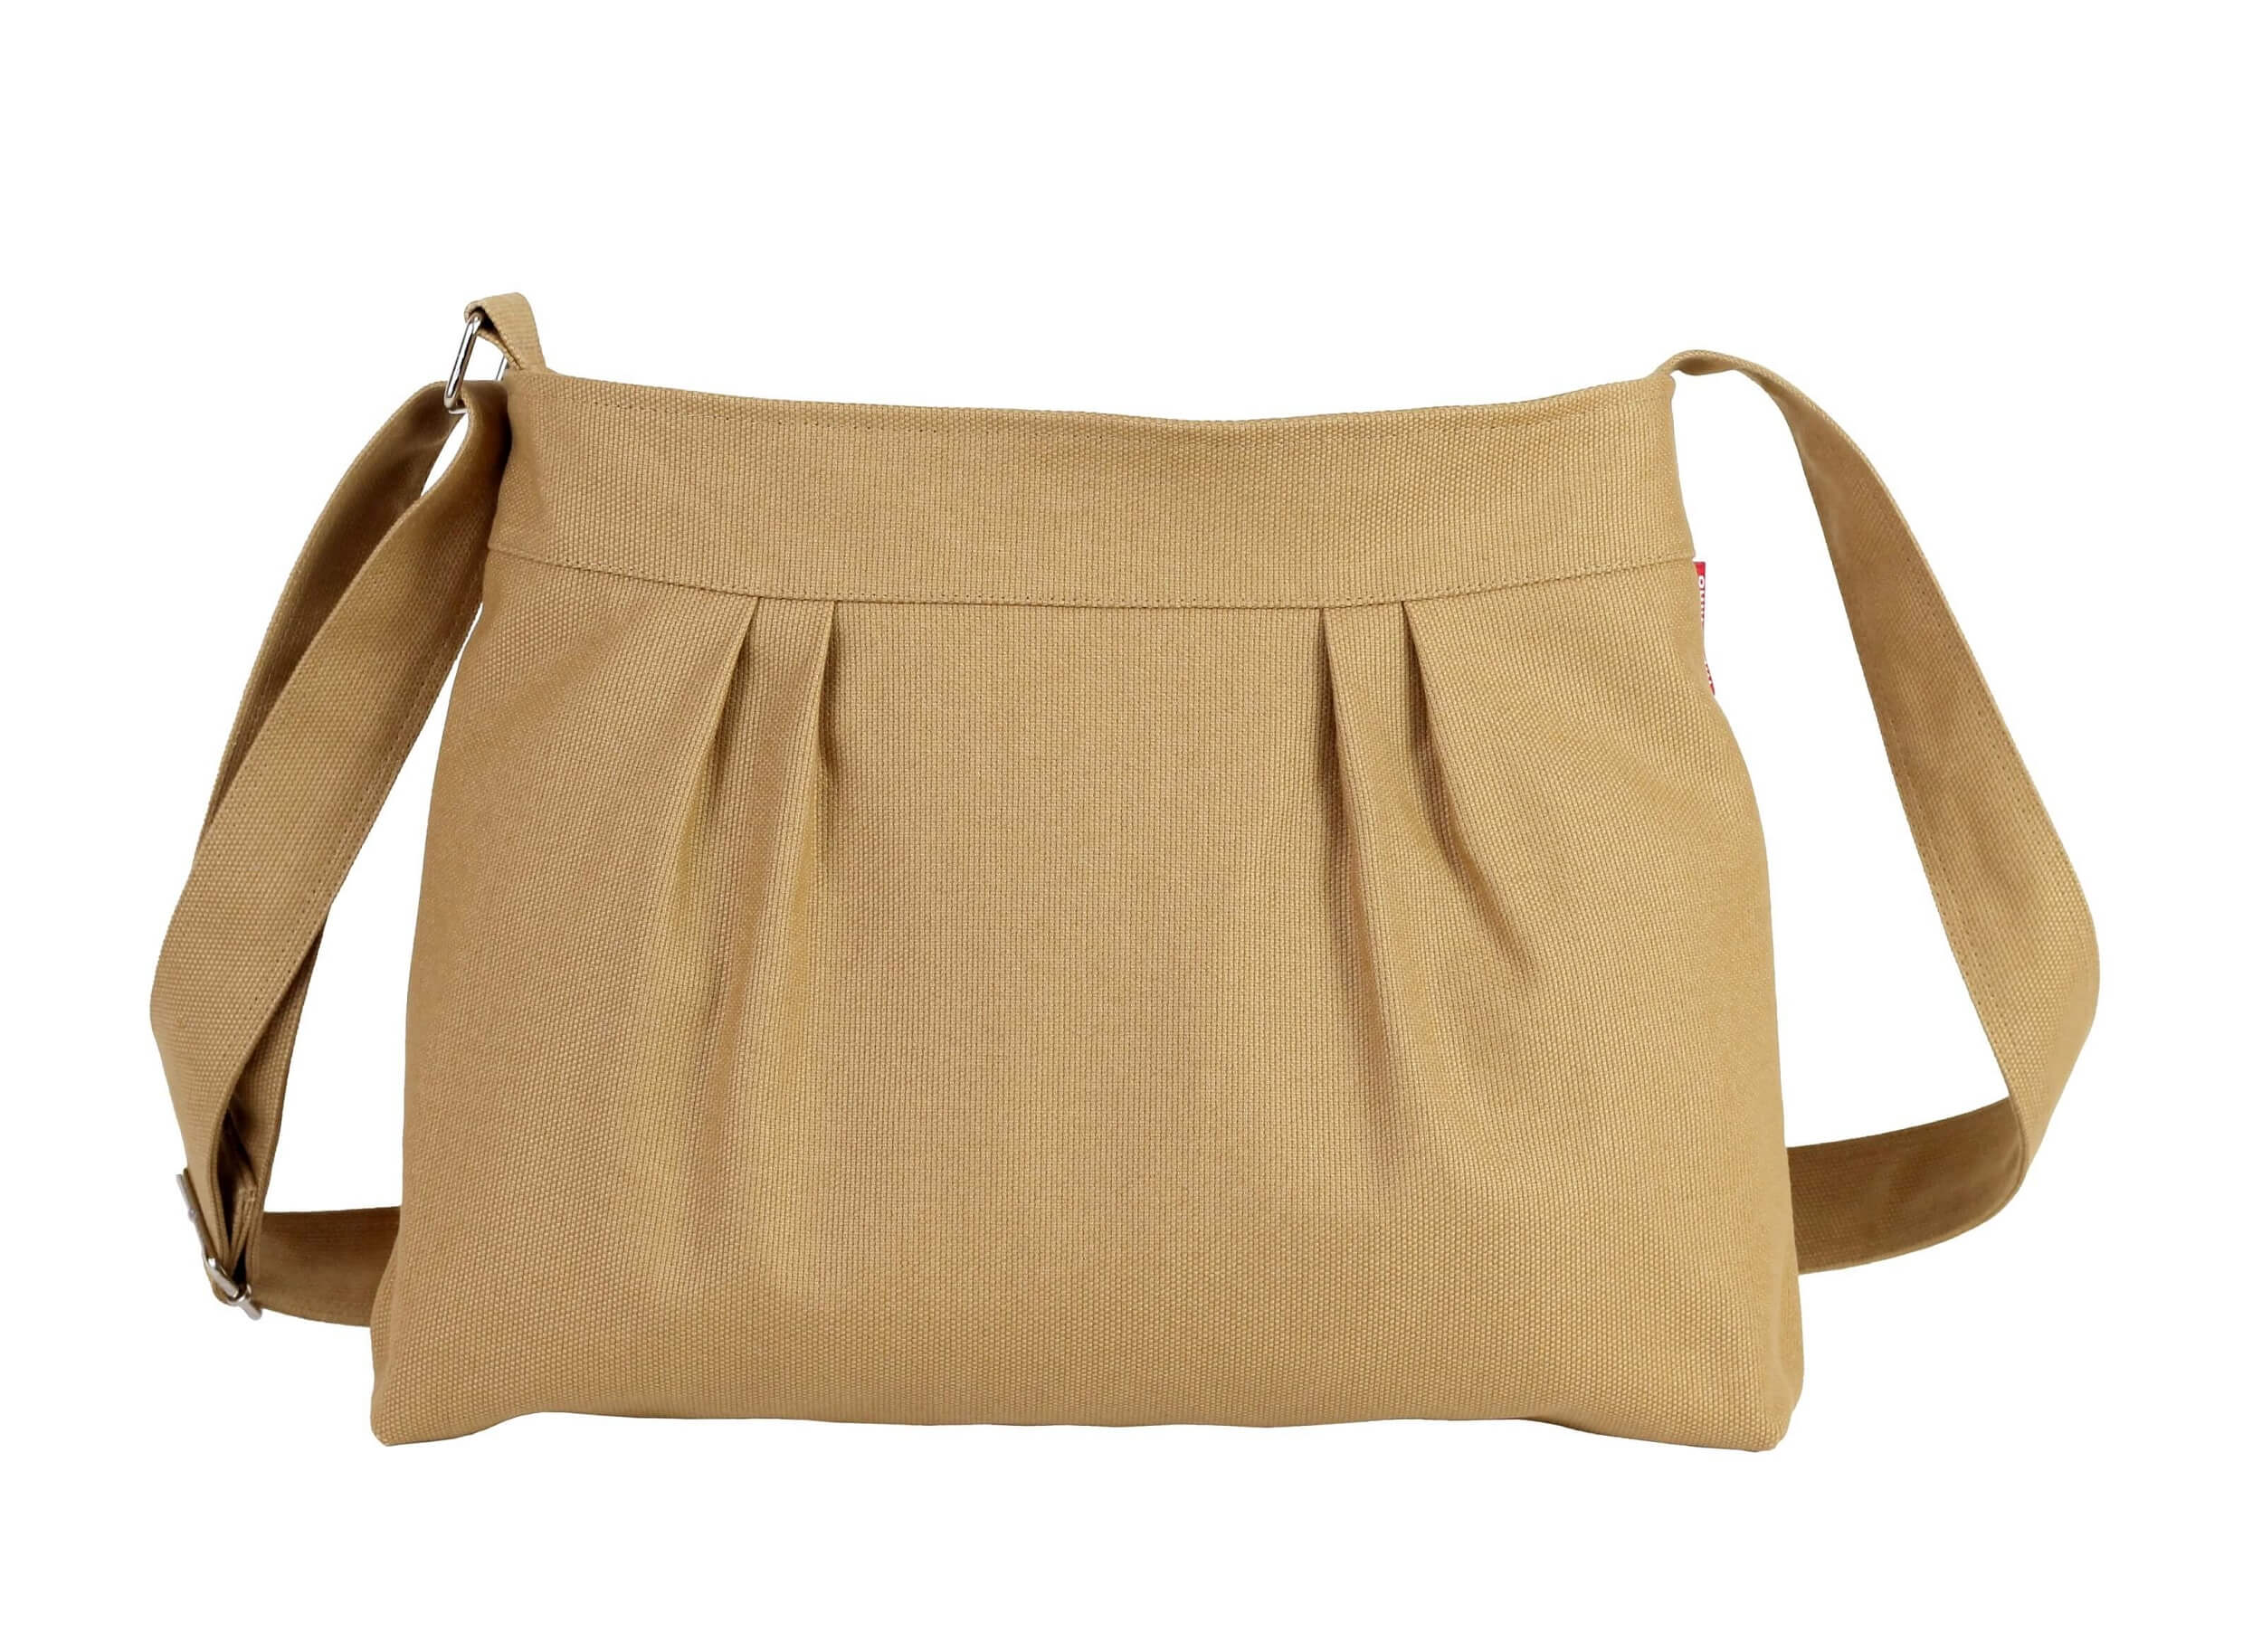 Soft Leather Crossbody Bag, Purse, Sling Bag, Hobo Handbags